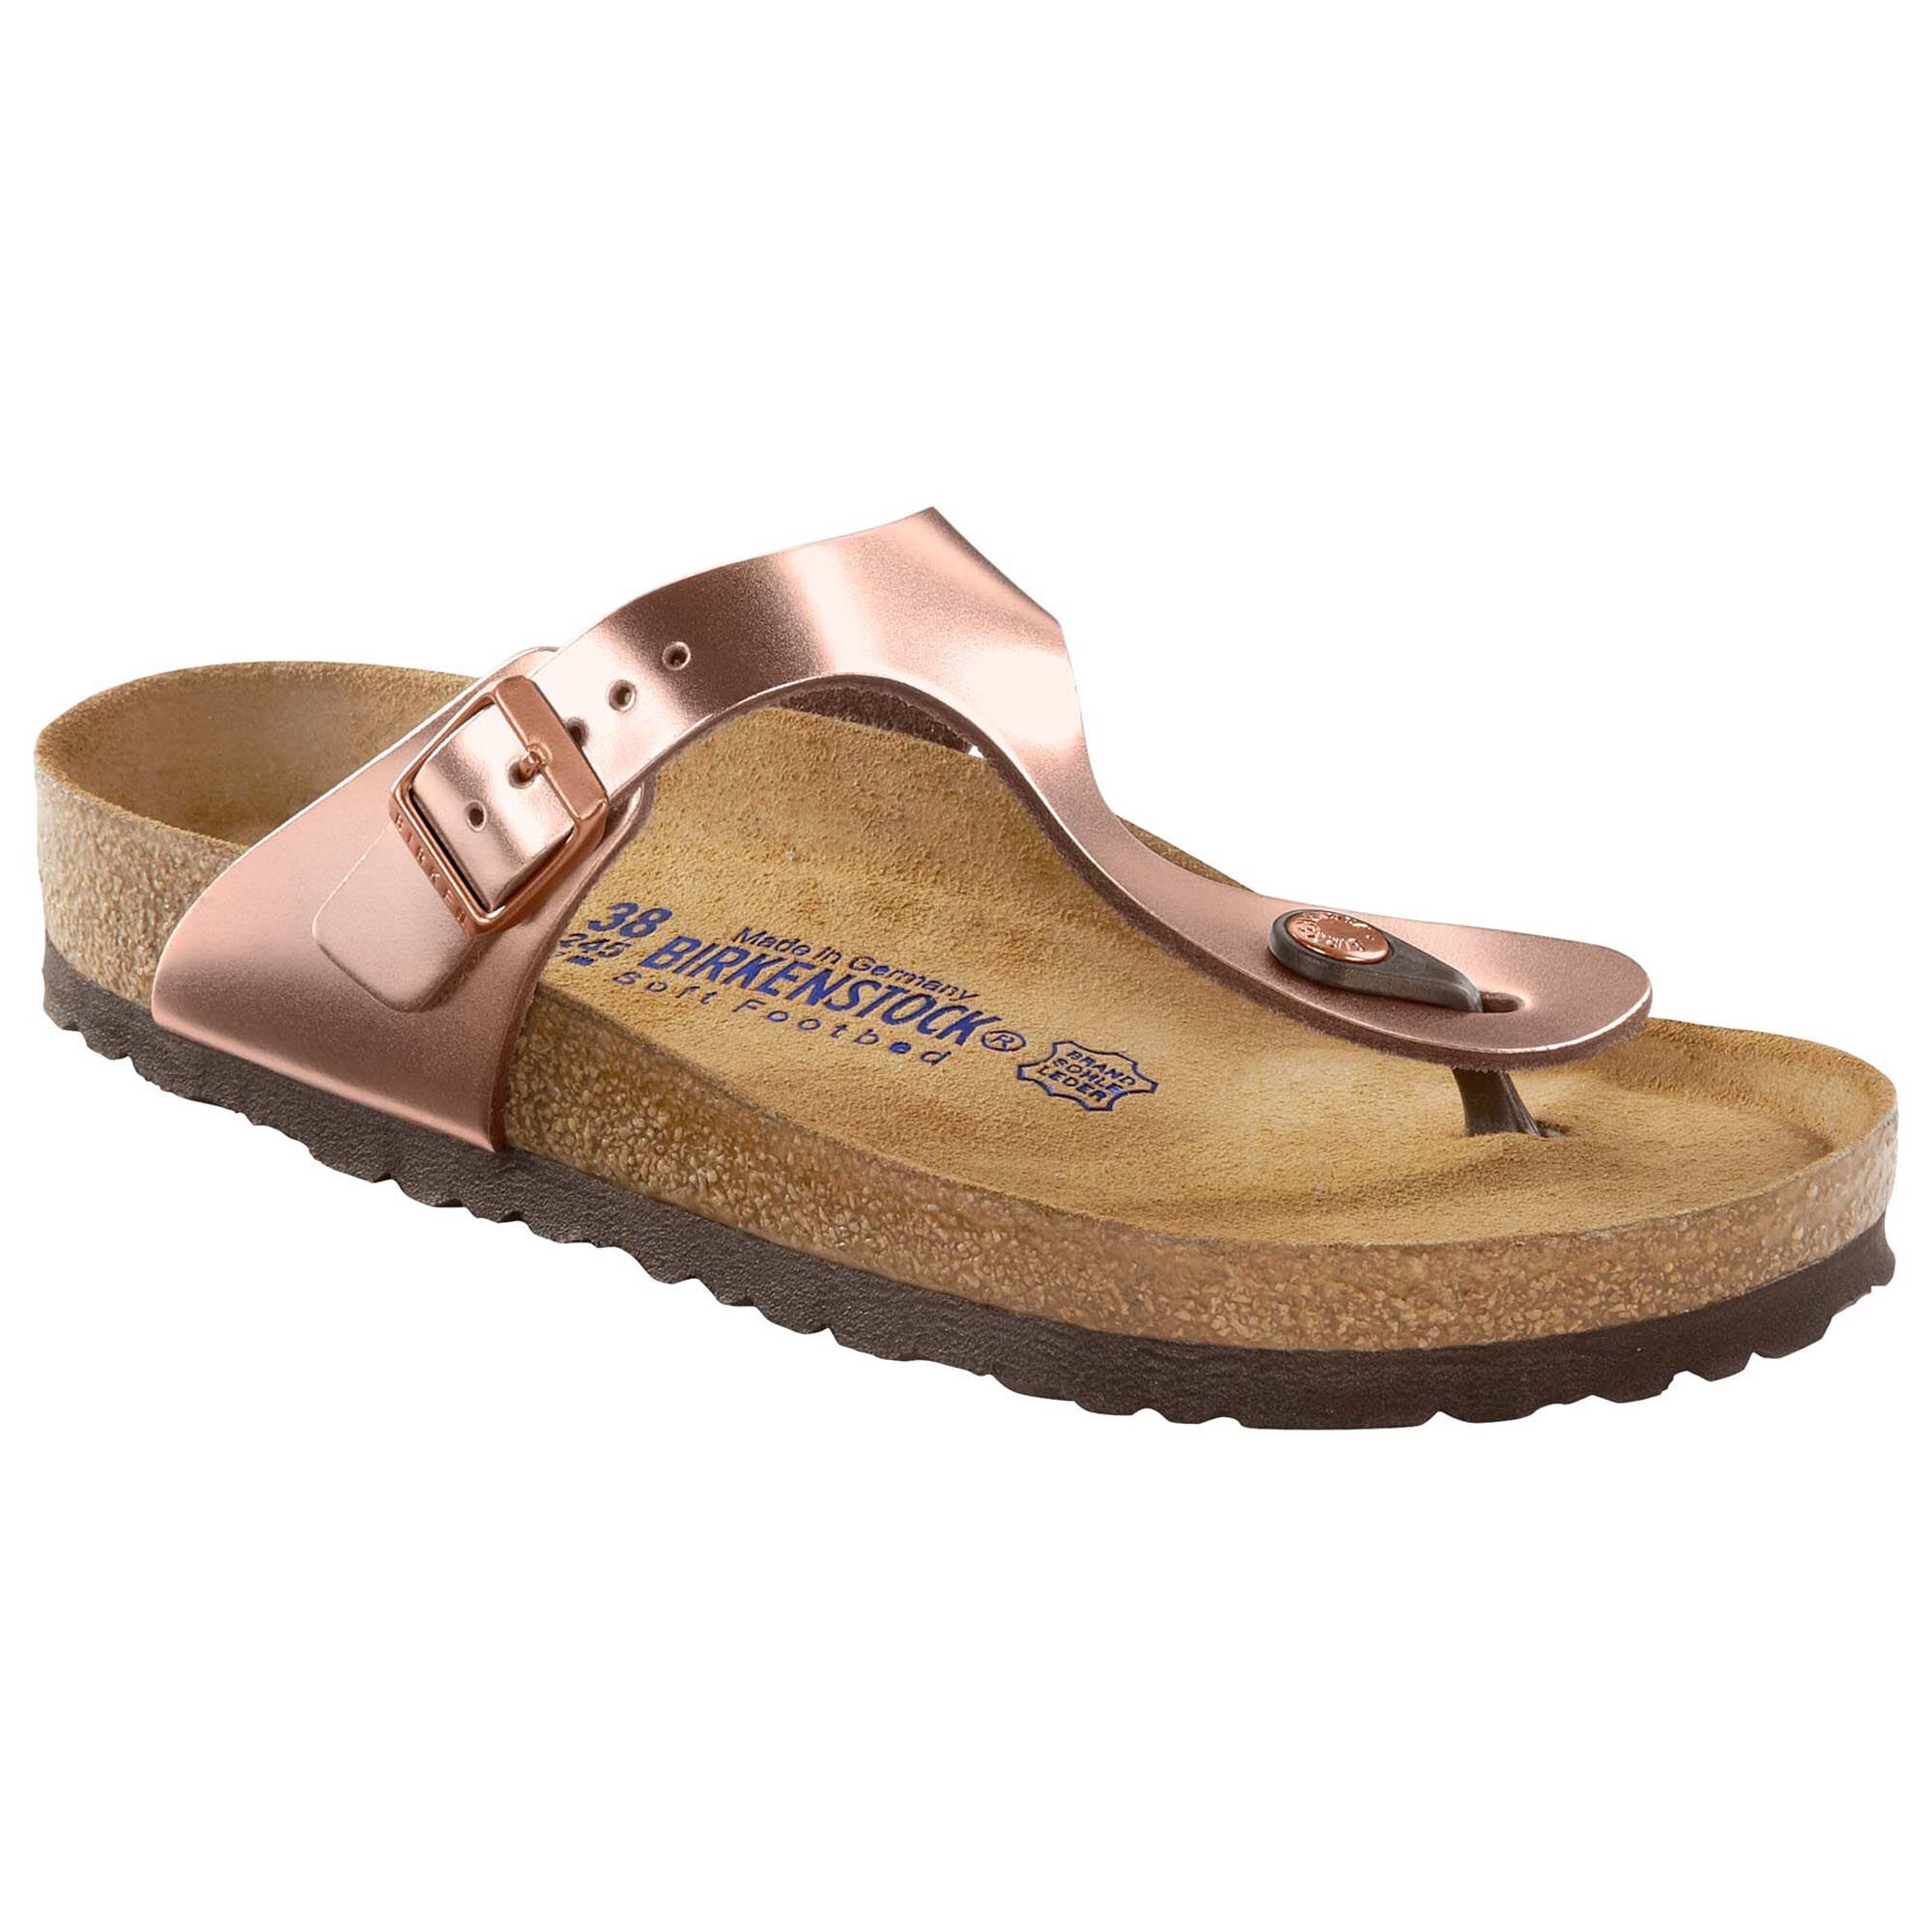 birkenstock women's zurich sandal